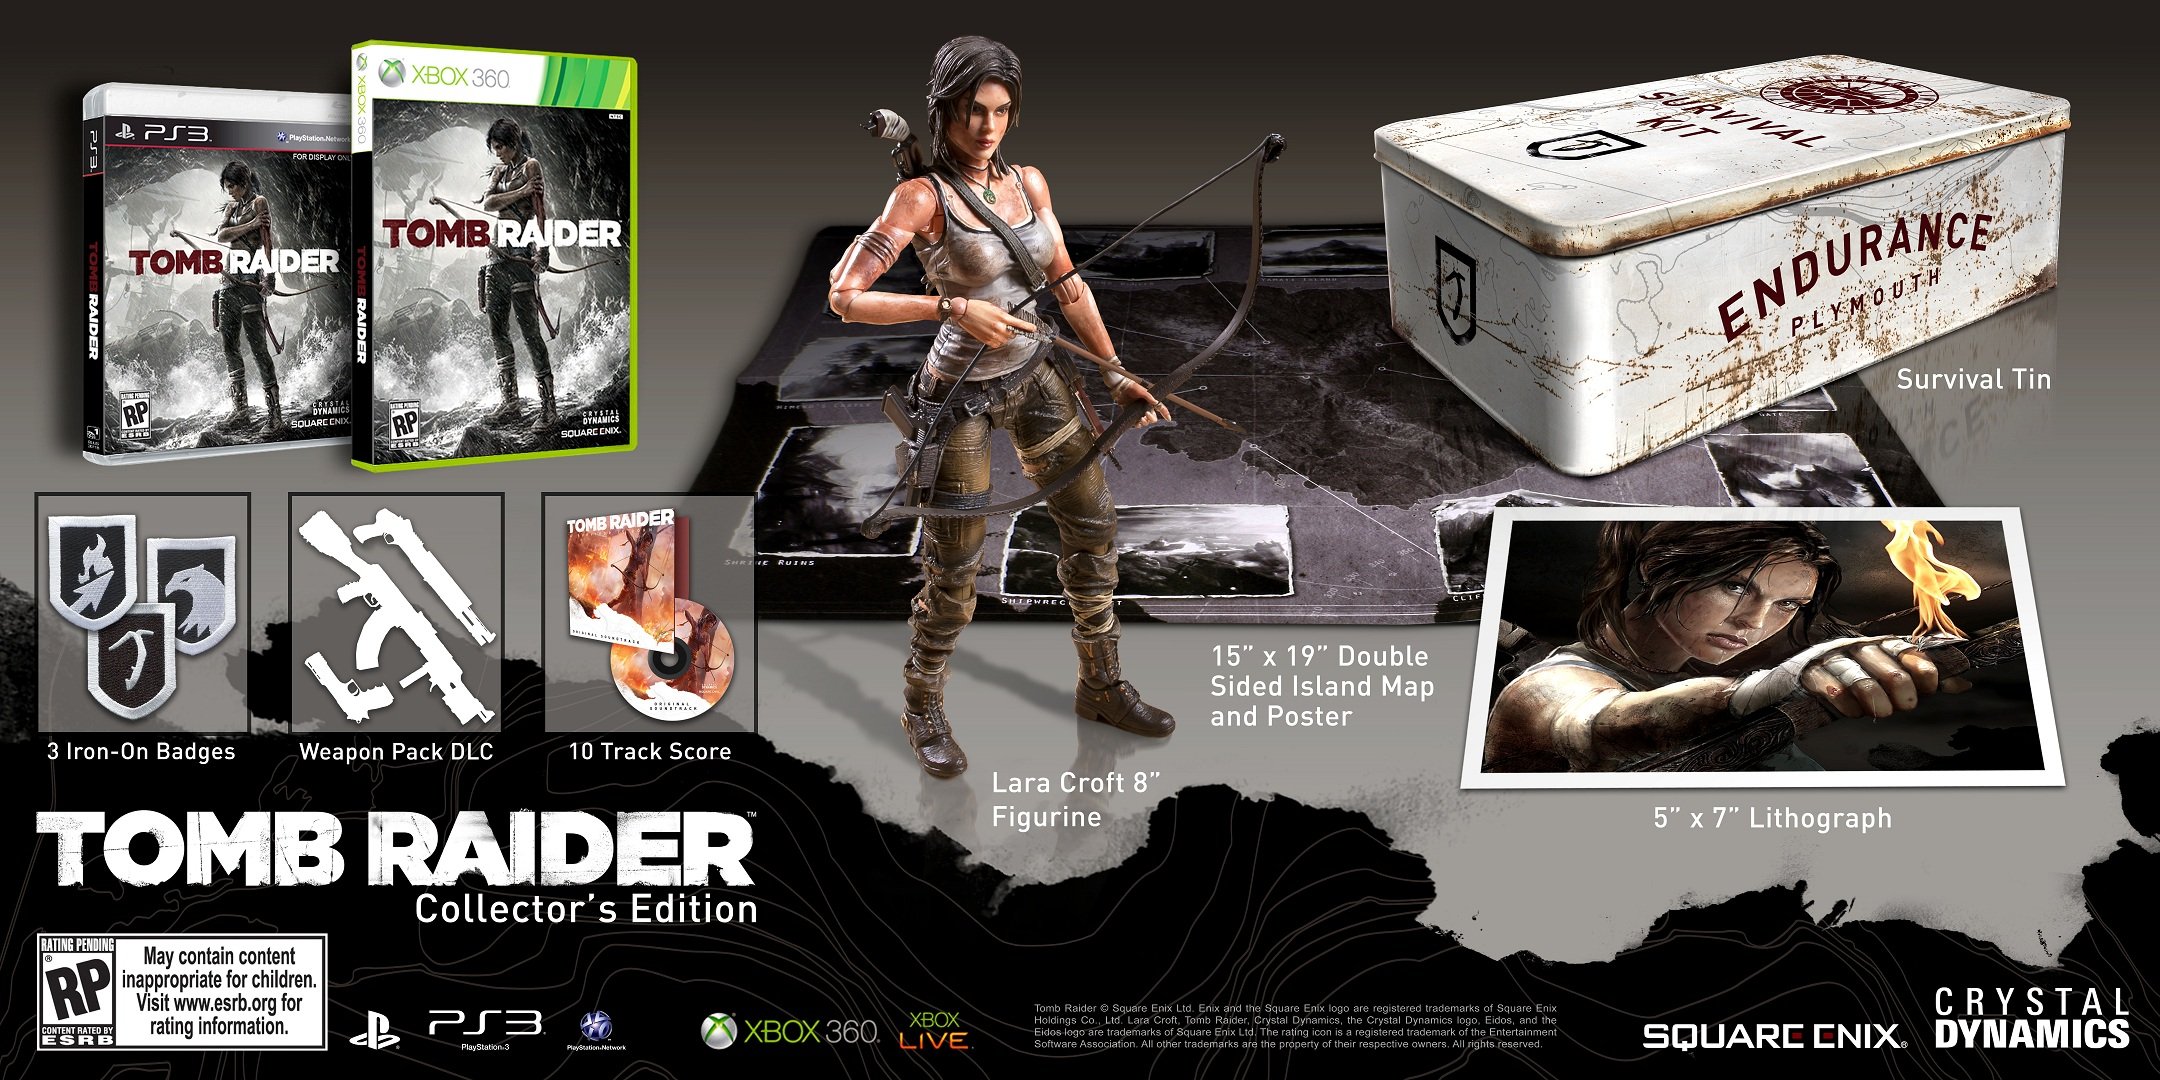 http://gematsu.com/wp-content/uploads/2012/11/Tomb-Raider-CE-Announce.jpg